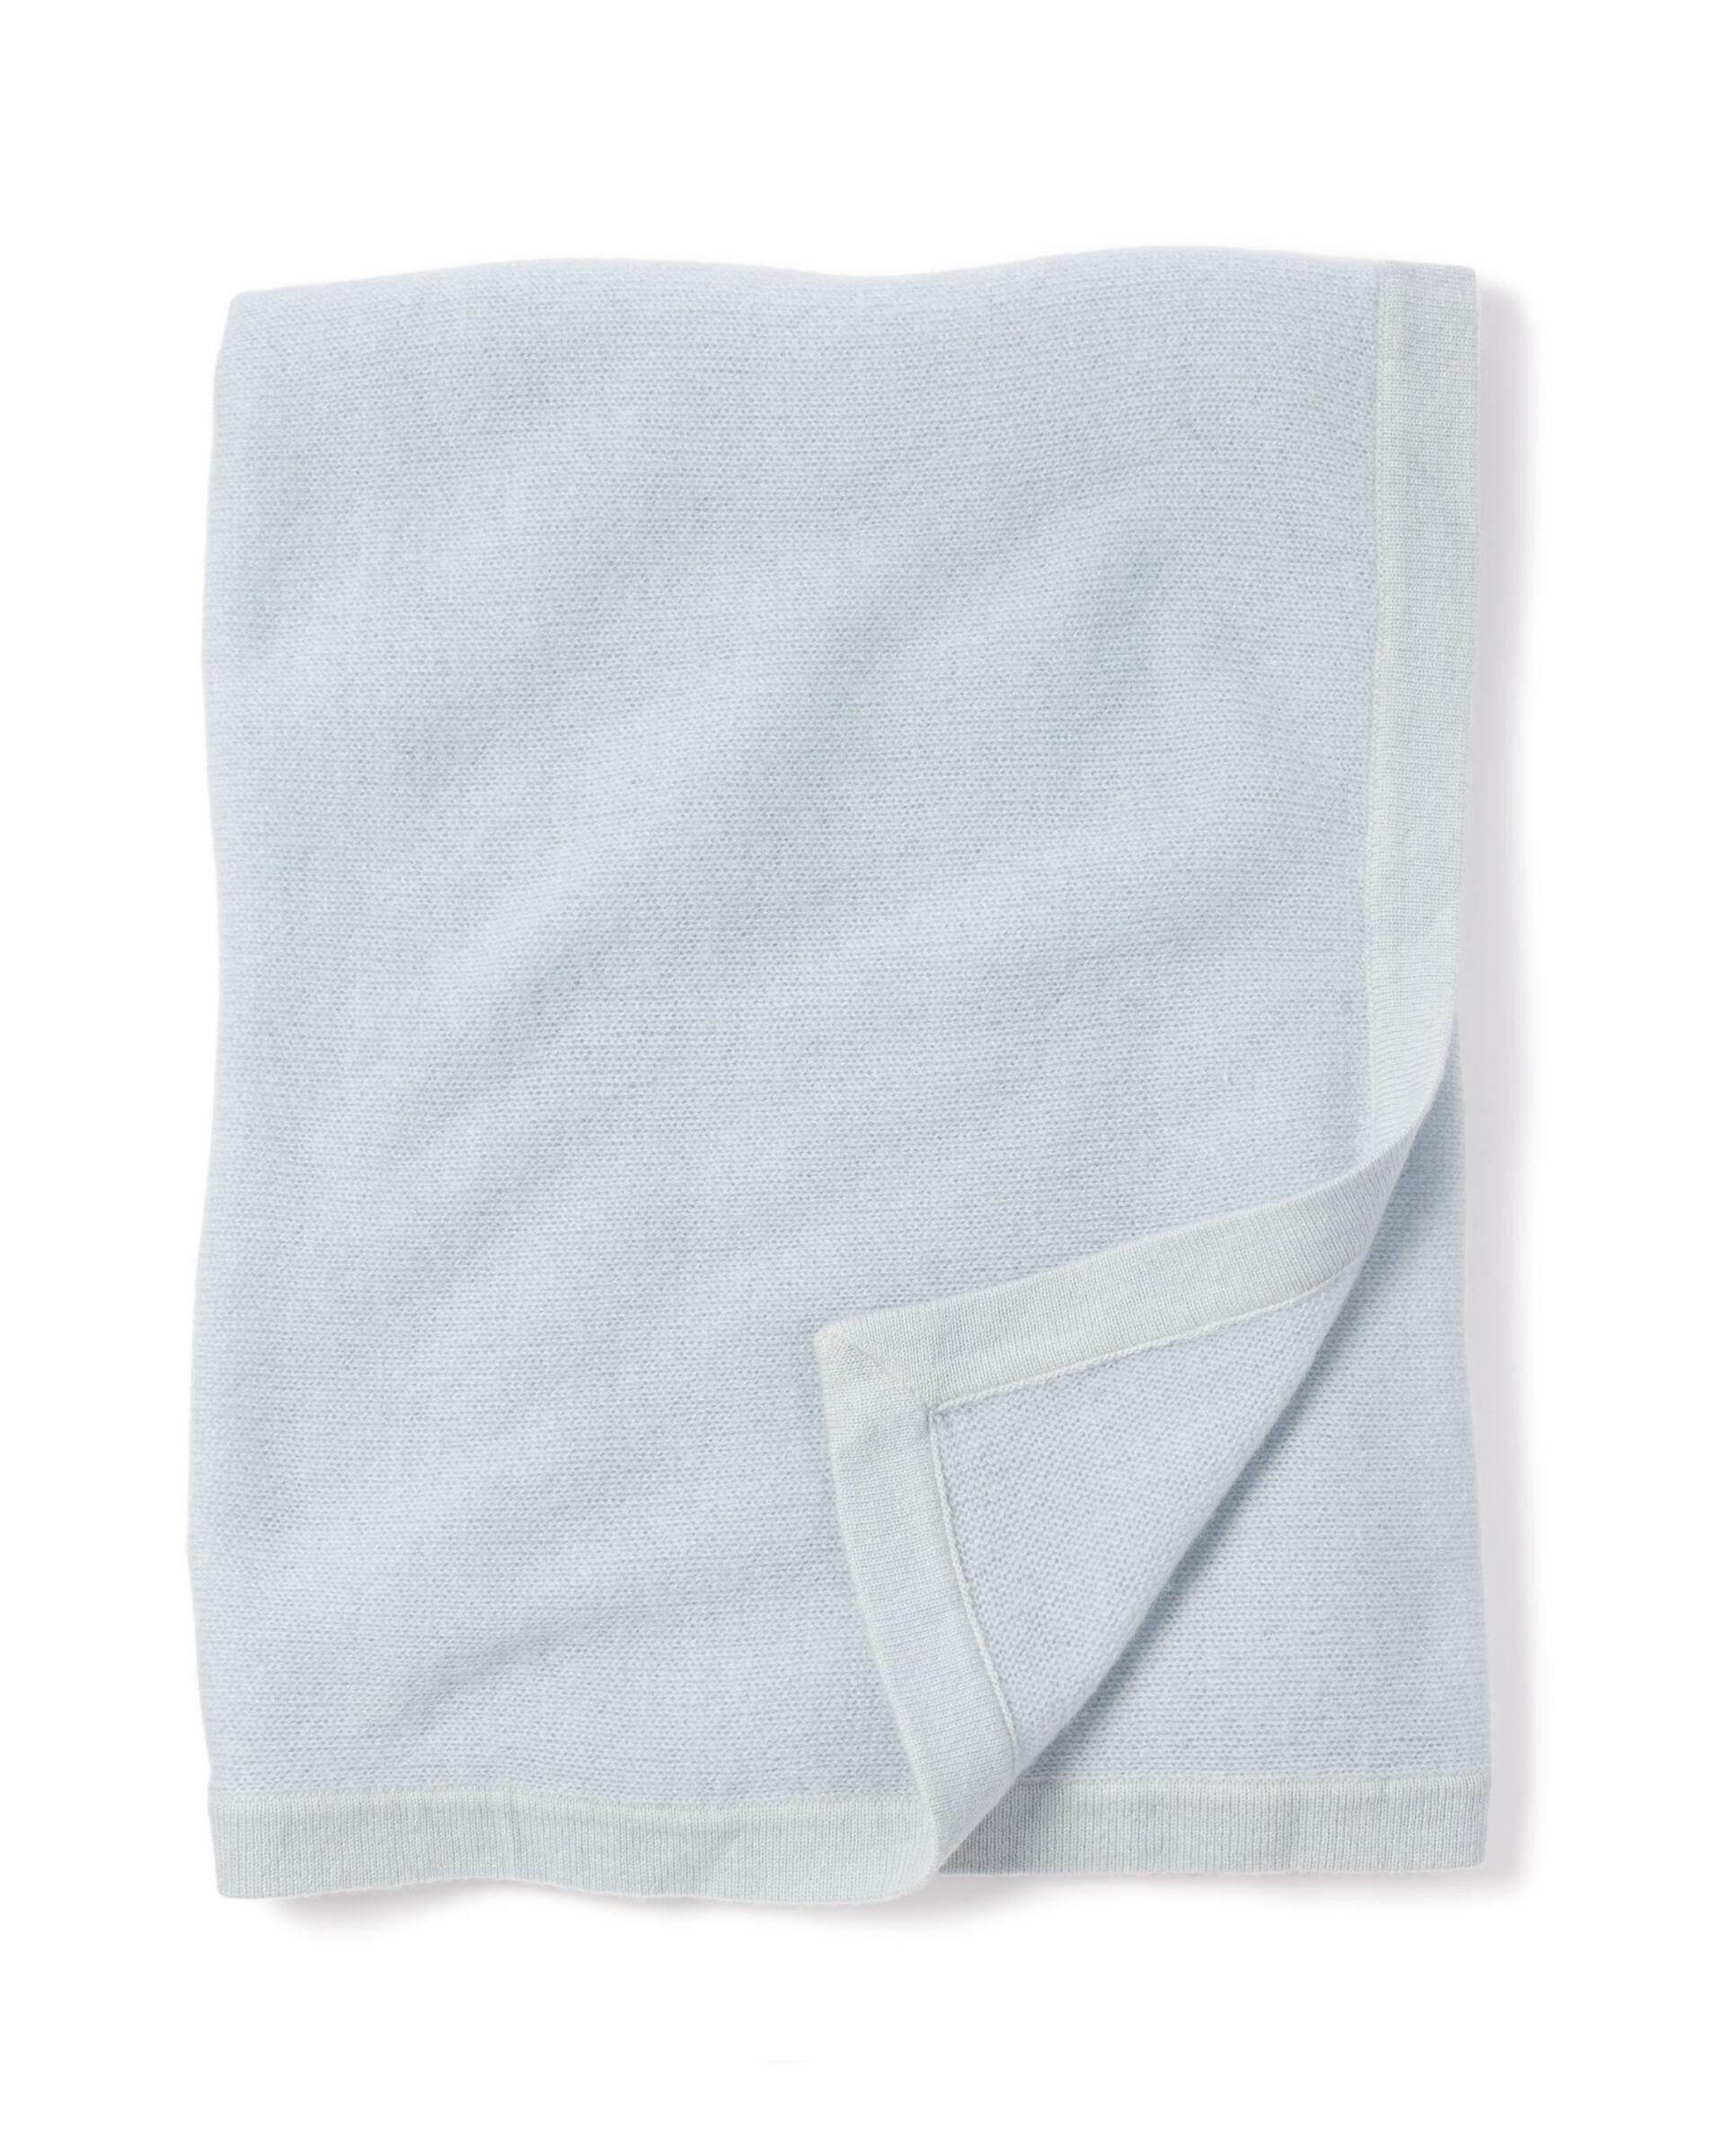 100% Cashmere Baby Blanket in Indigo - Petite Plume